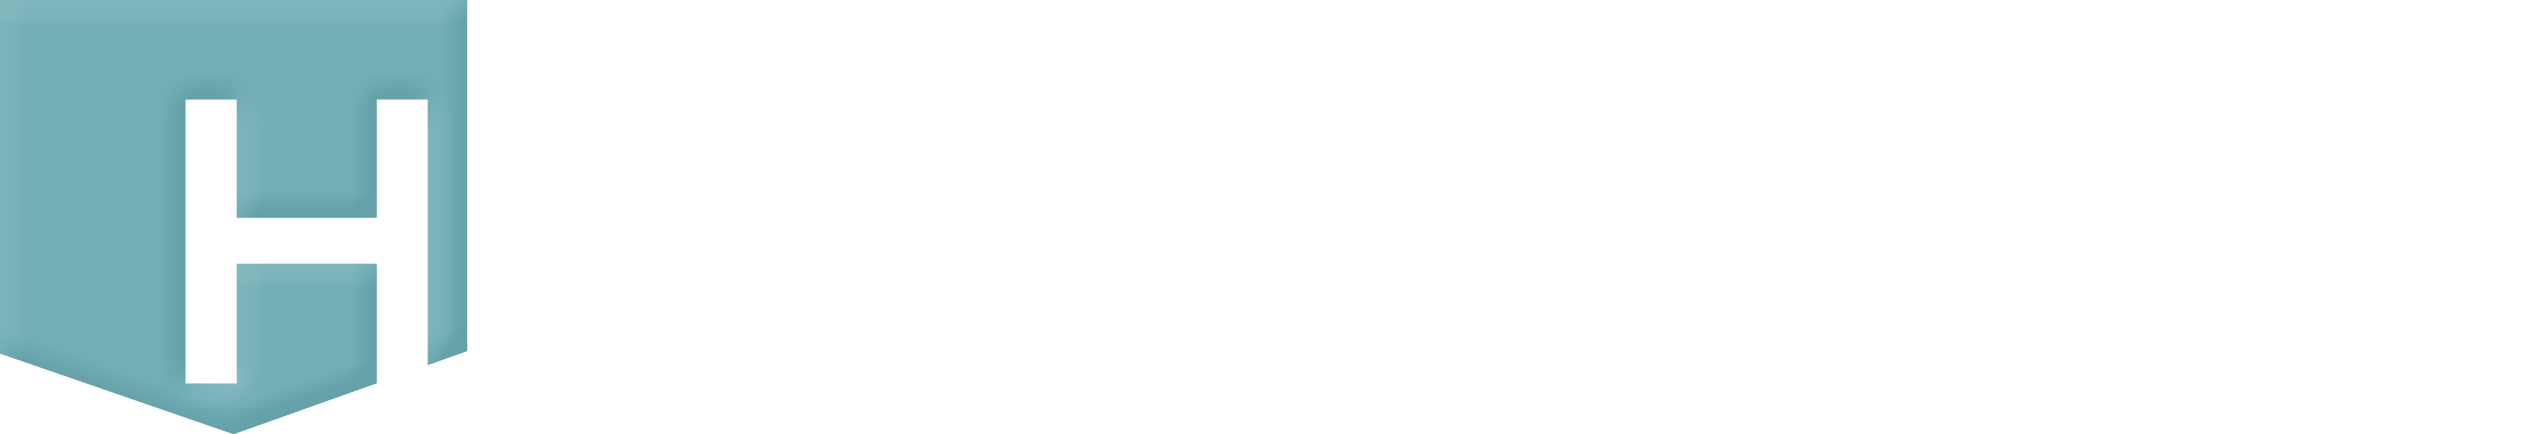 HighCap Financial Logo White Text